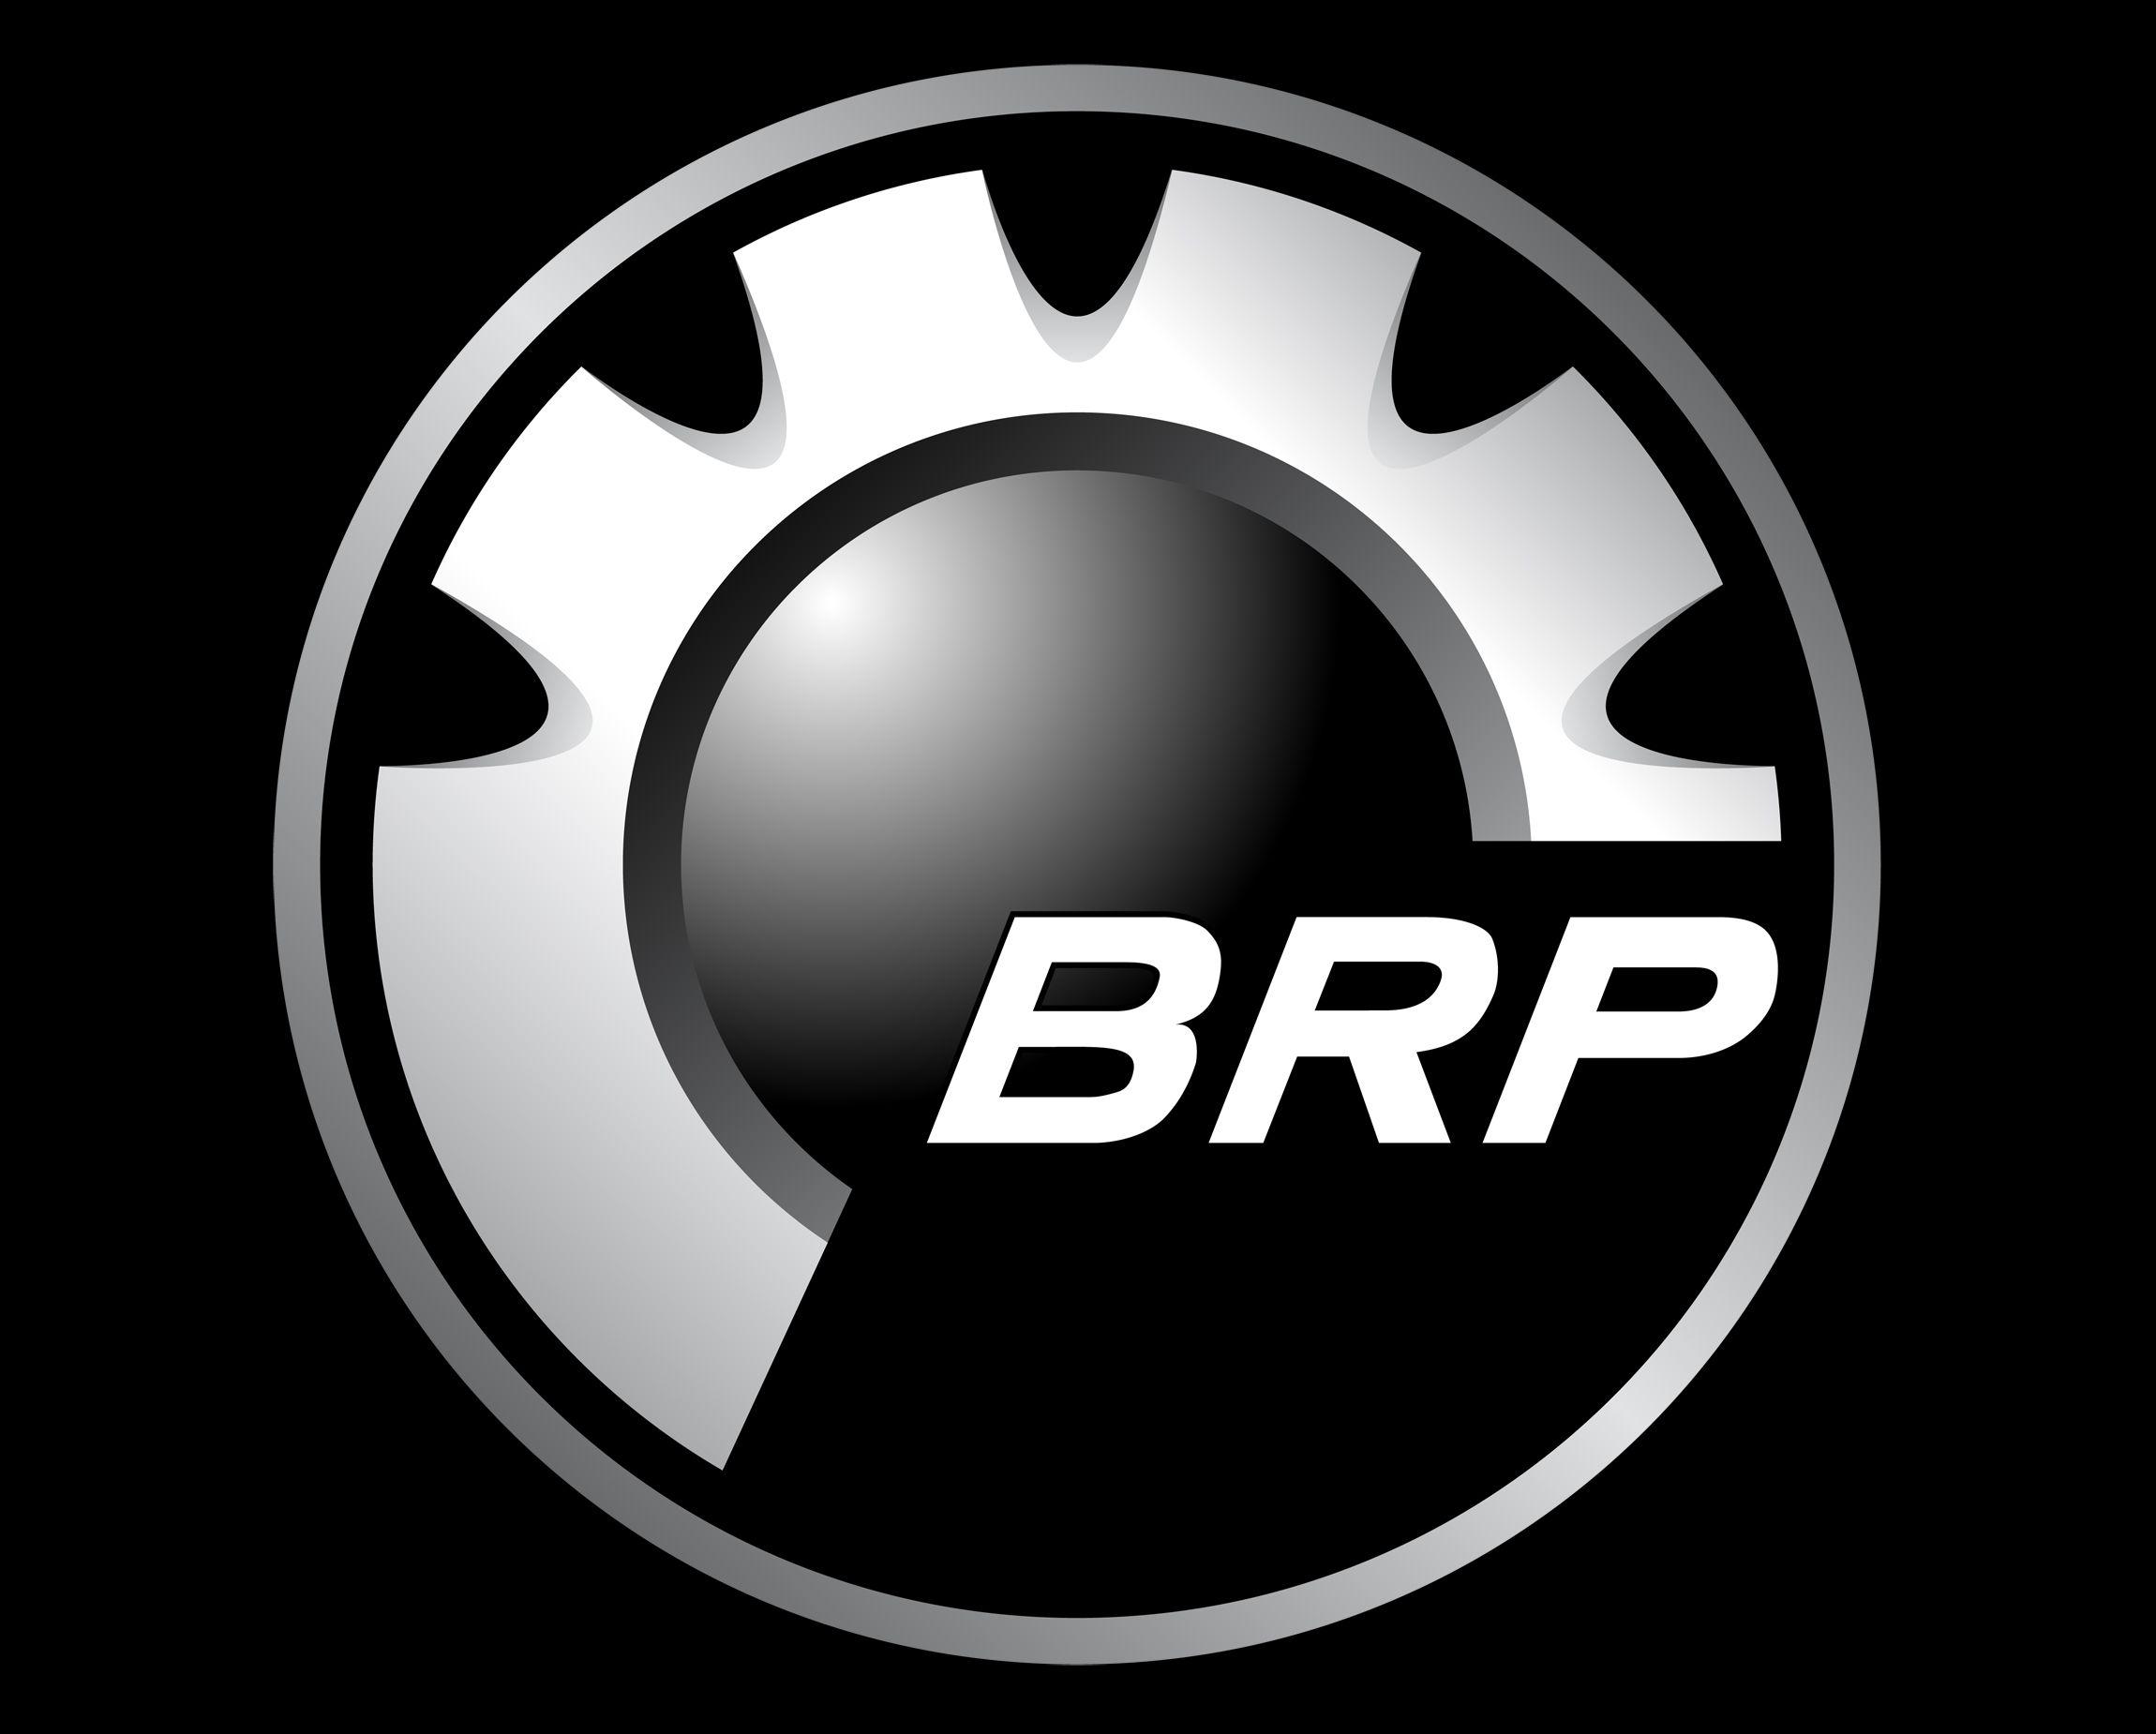 BRP Logo - BRP logo. Motorcycle brands: logo, specs, history